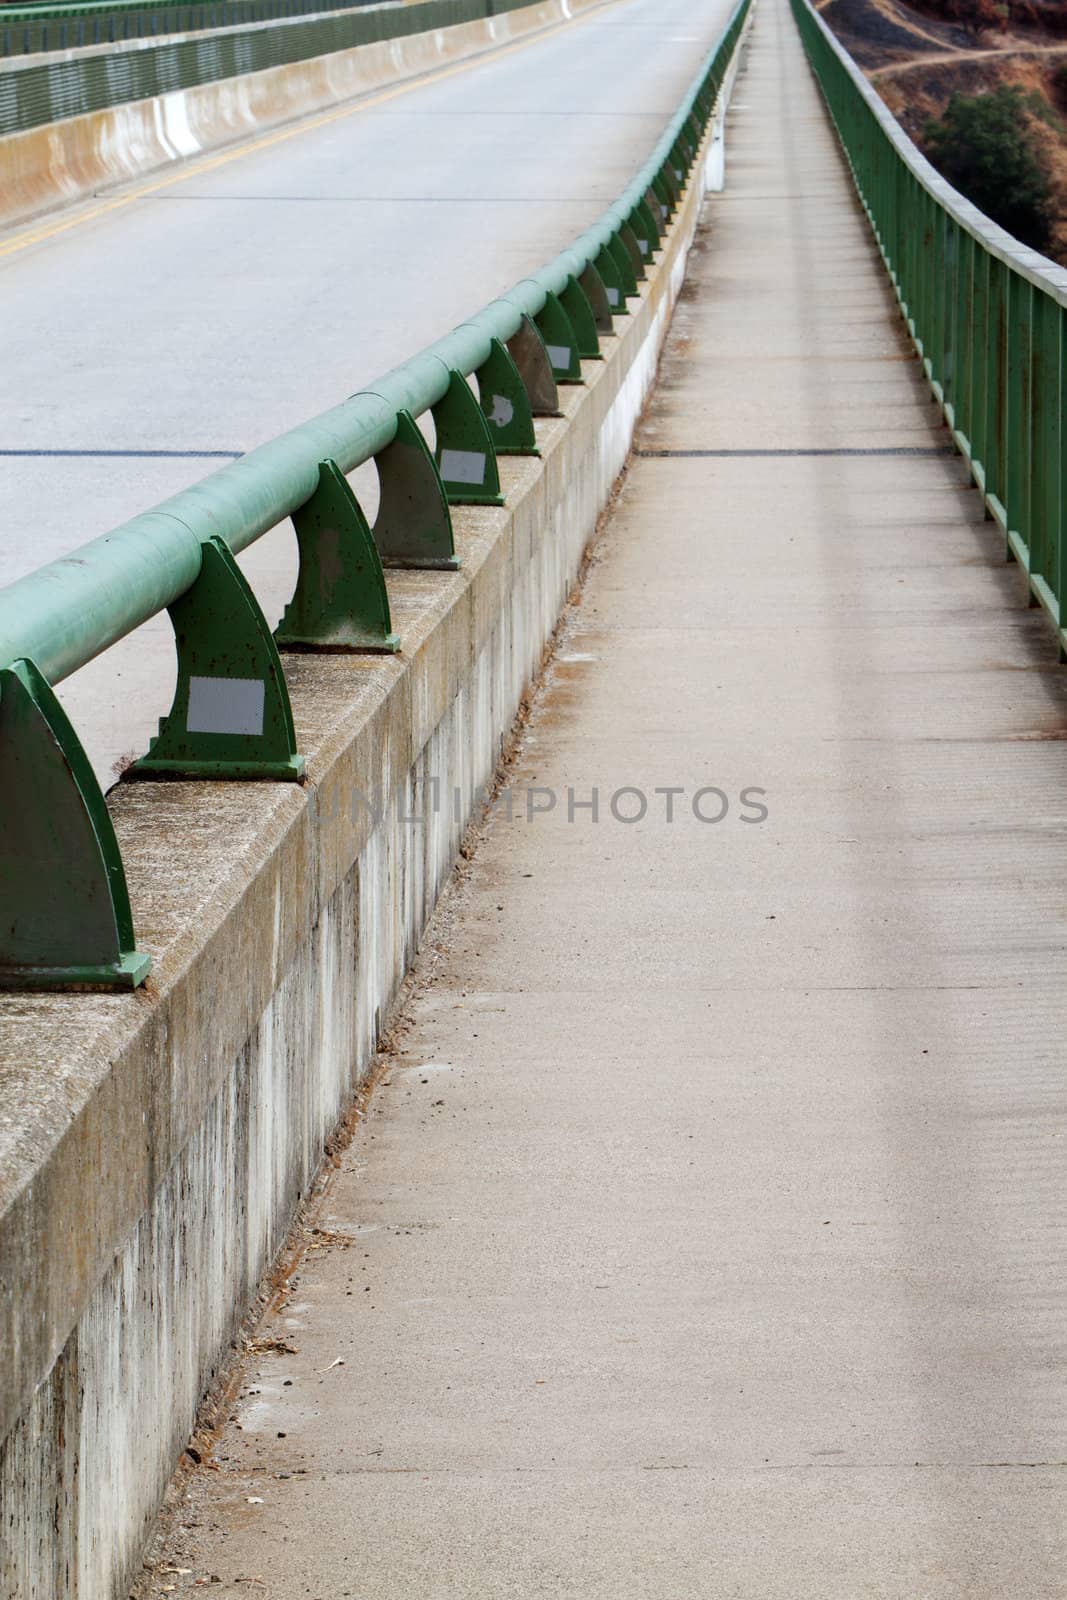 Road and pedestrian walk on bridge with green metal gaurd rails